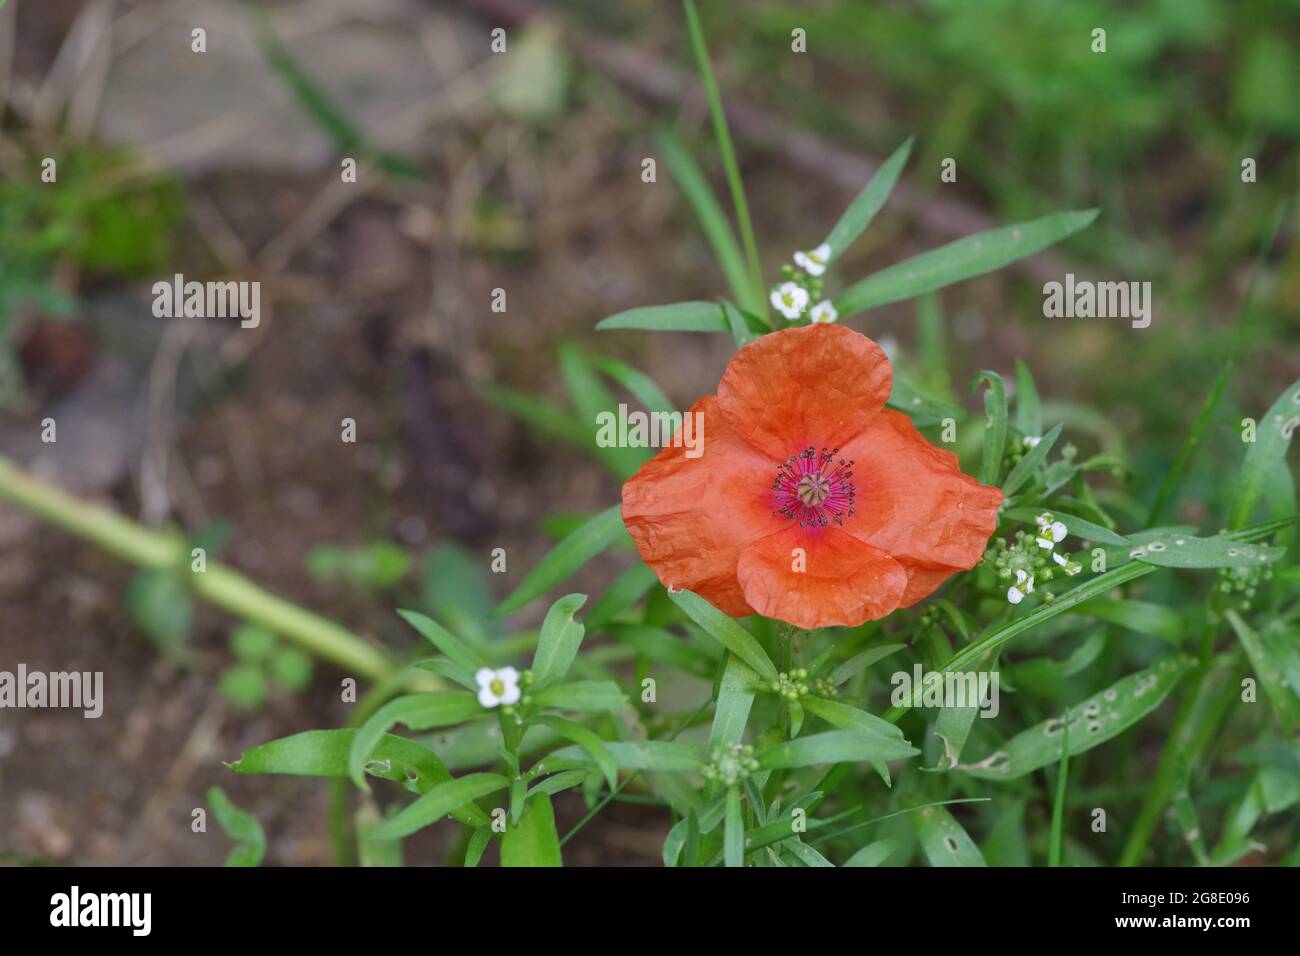 Closeup shot of Papaver apulum (poppy) in a garden Stock Photo